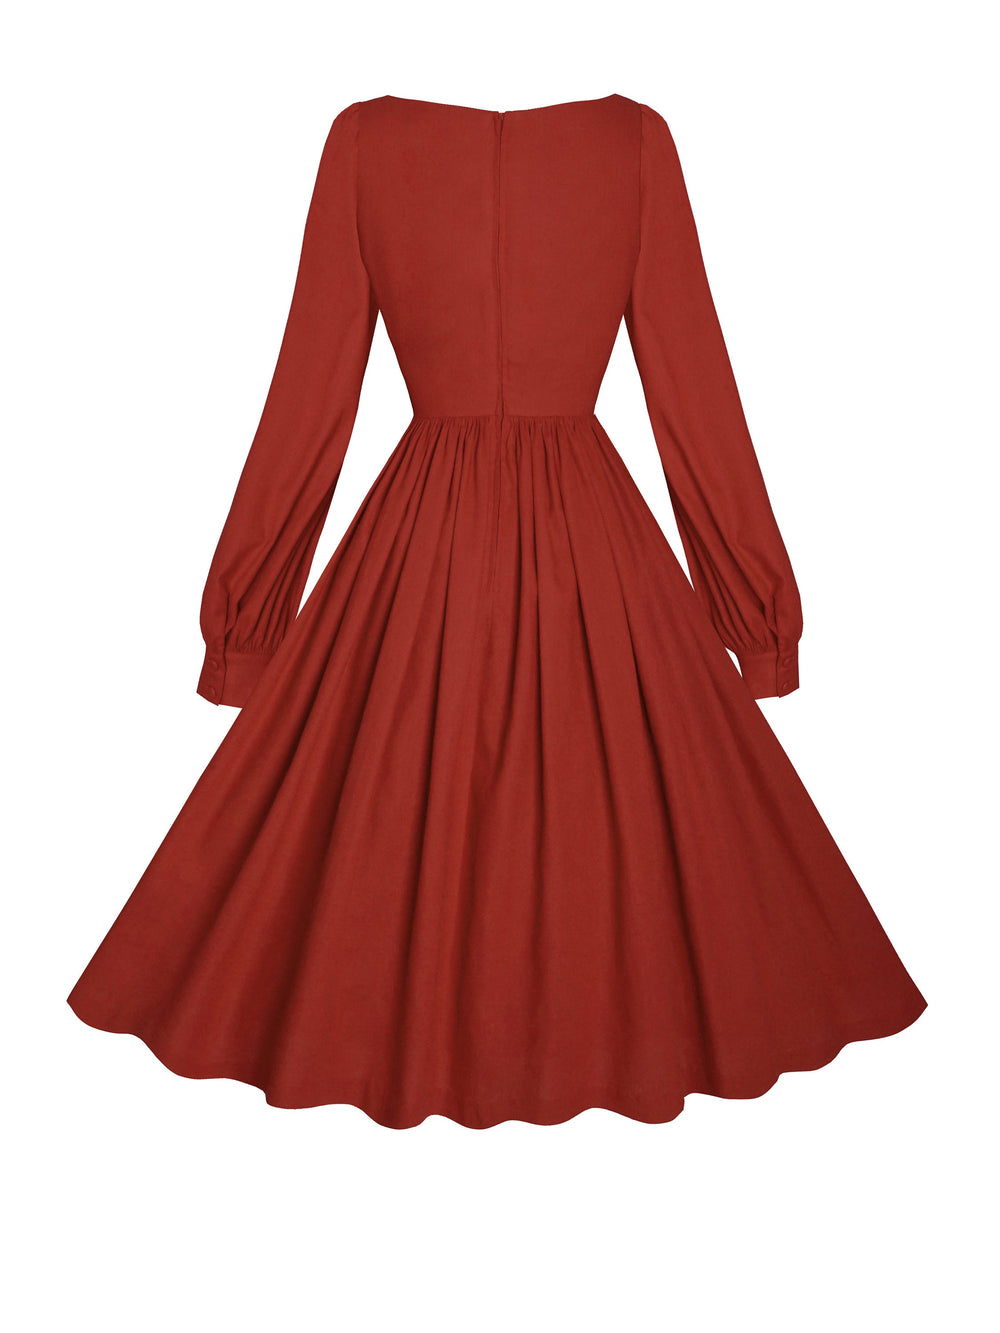 MTO - Harlow Dress in Brick Red Linen